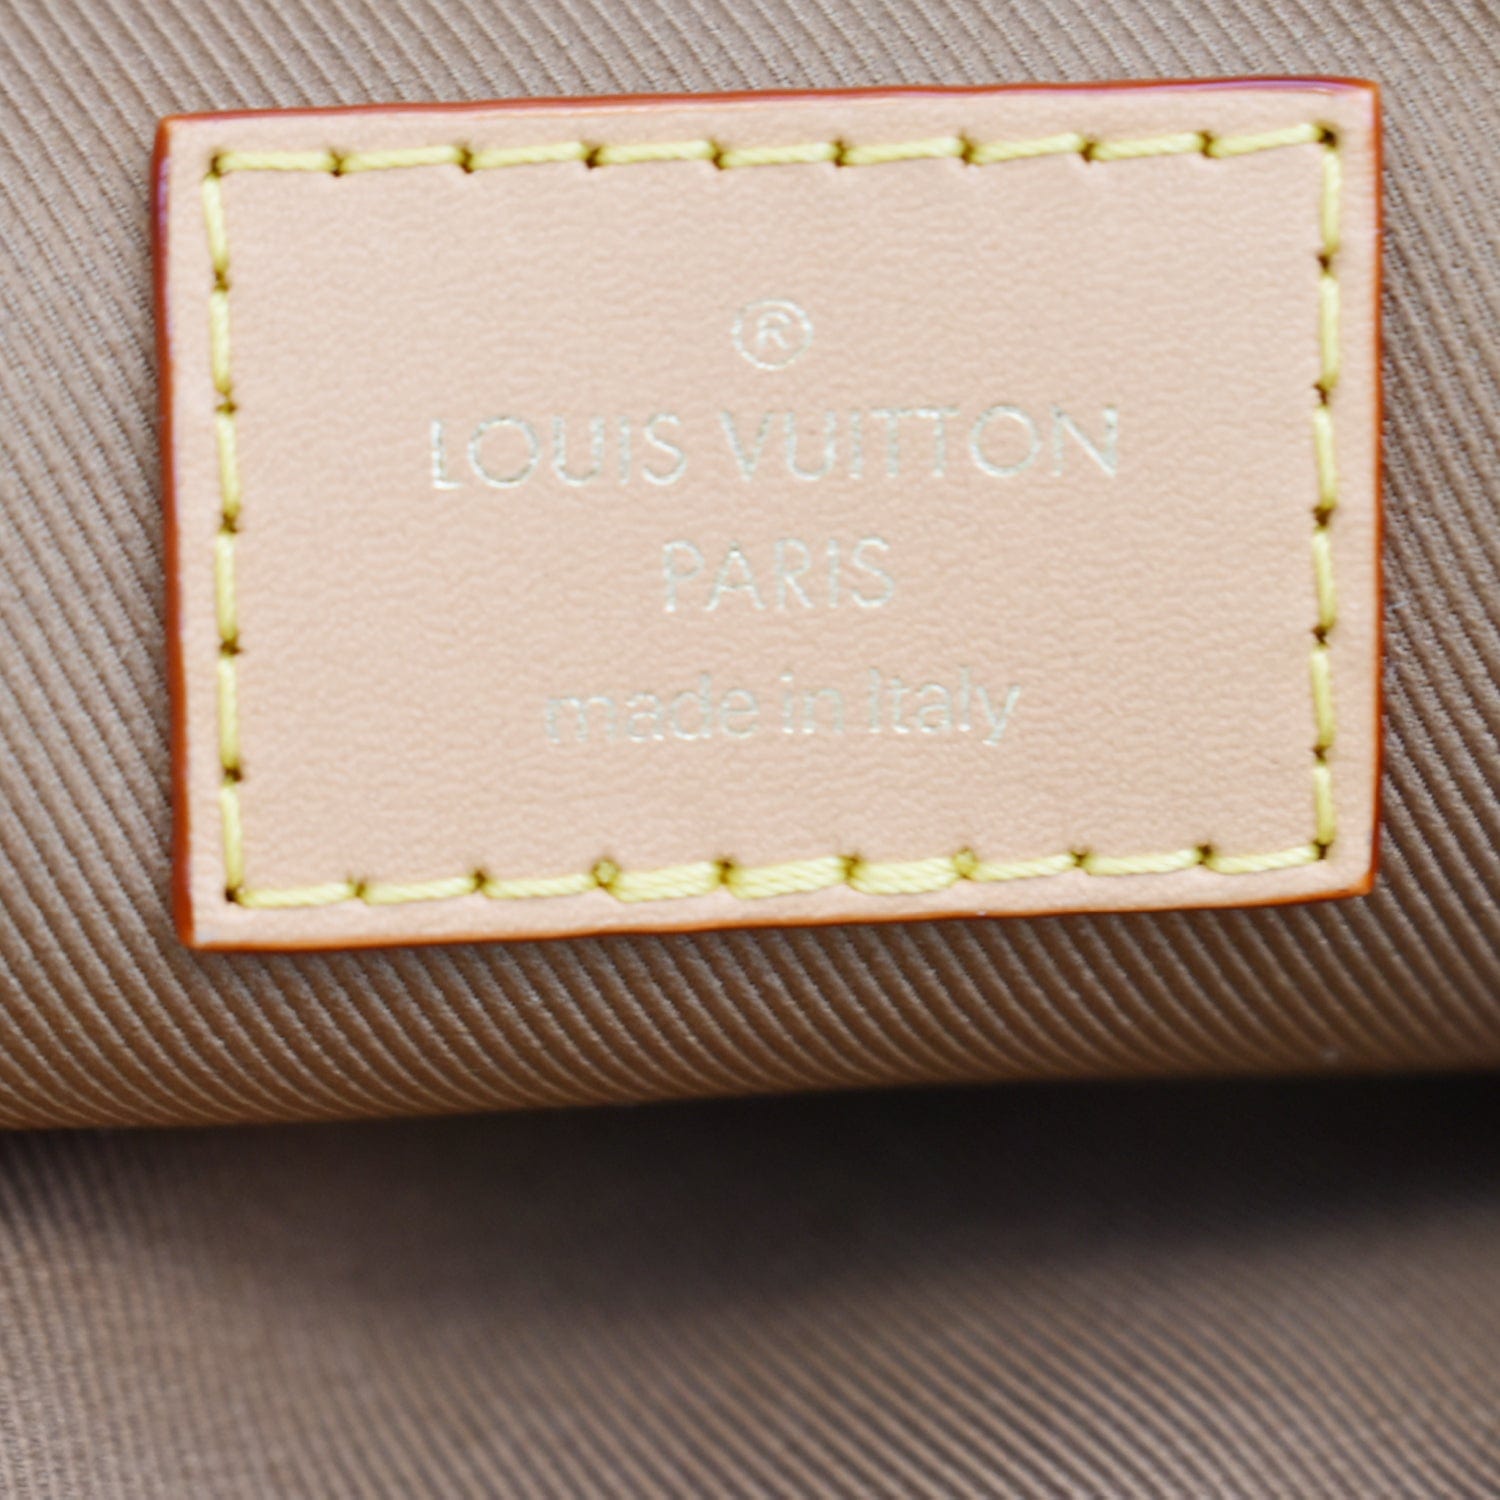 Louis Vuitton Utility Phone Sleeve - BAGAHOLICBOY